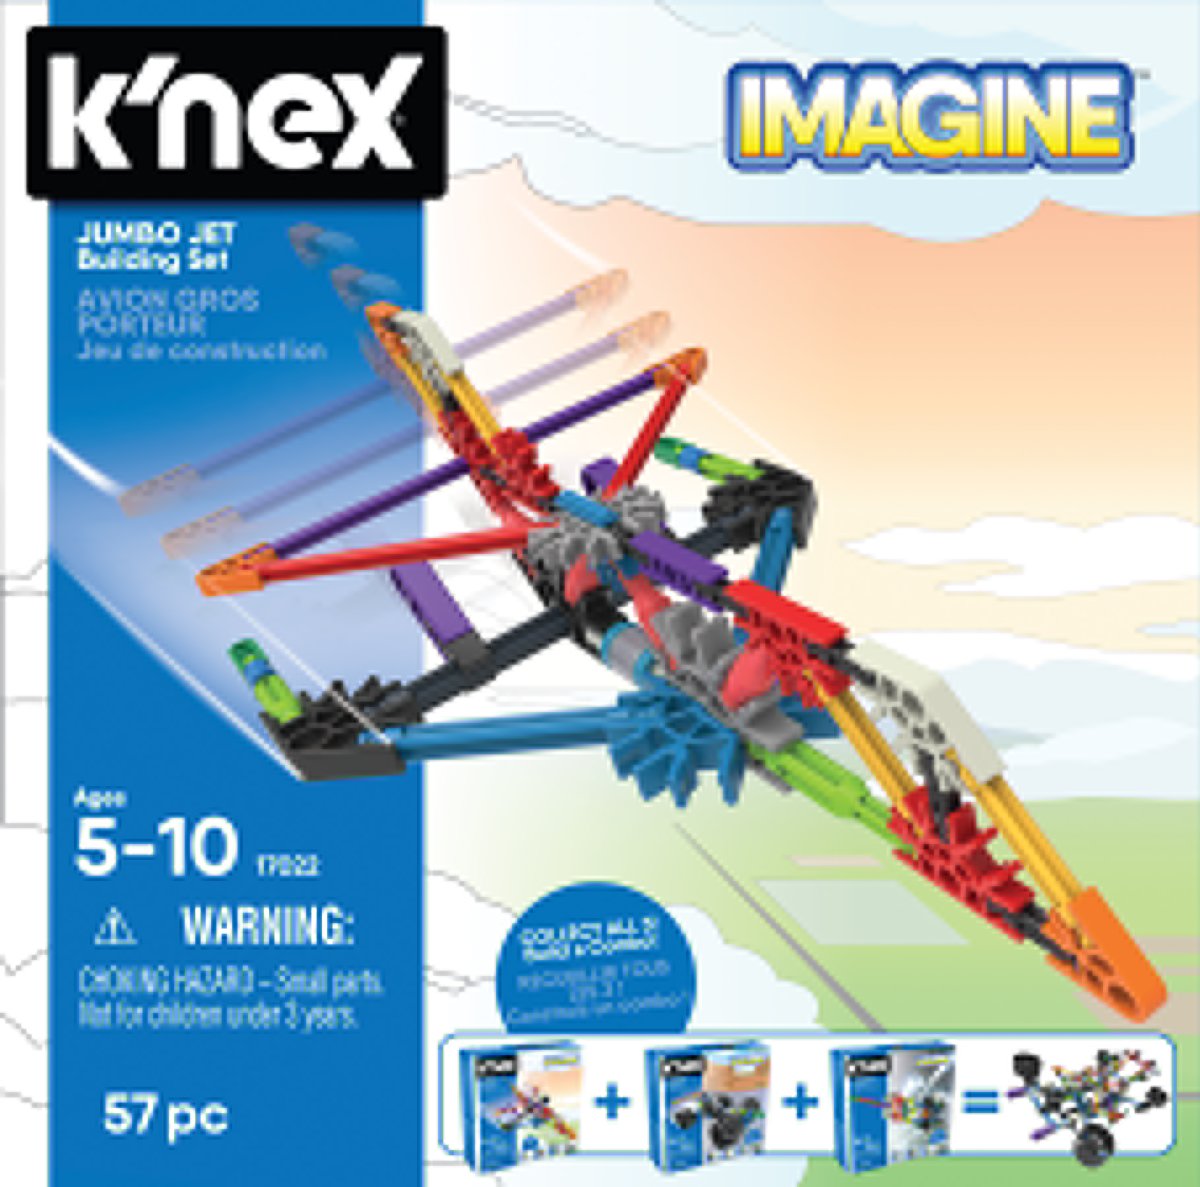 Knex Building Sets - Jumbo Jet